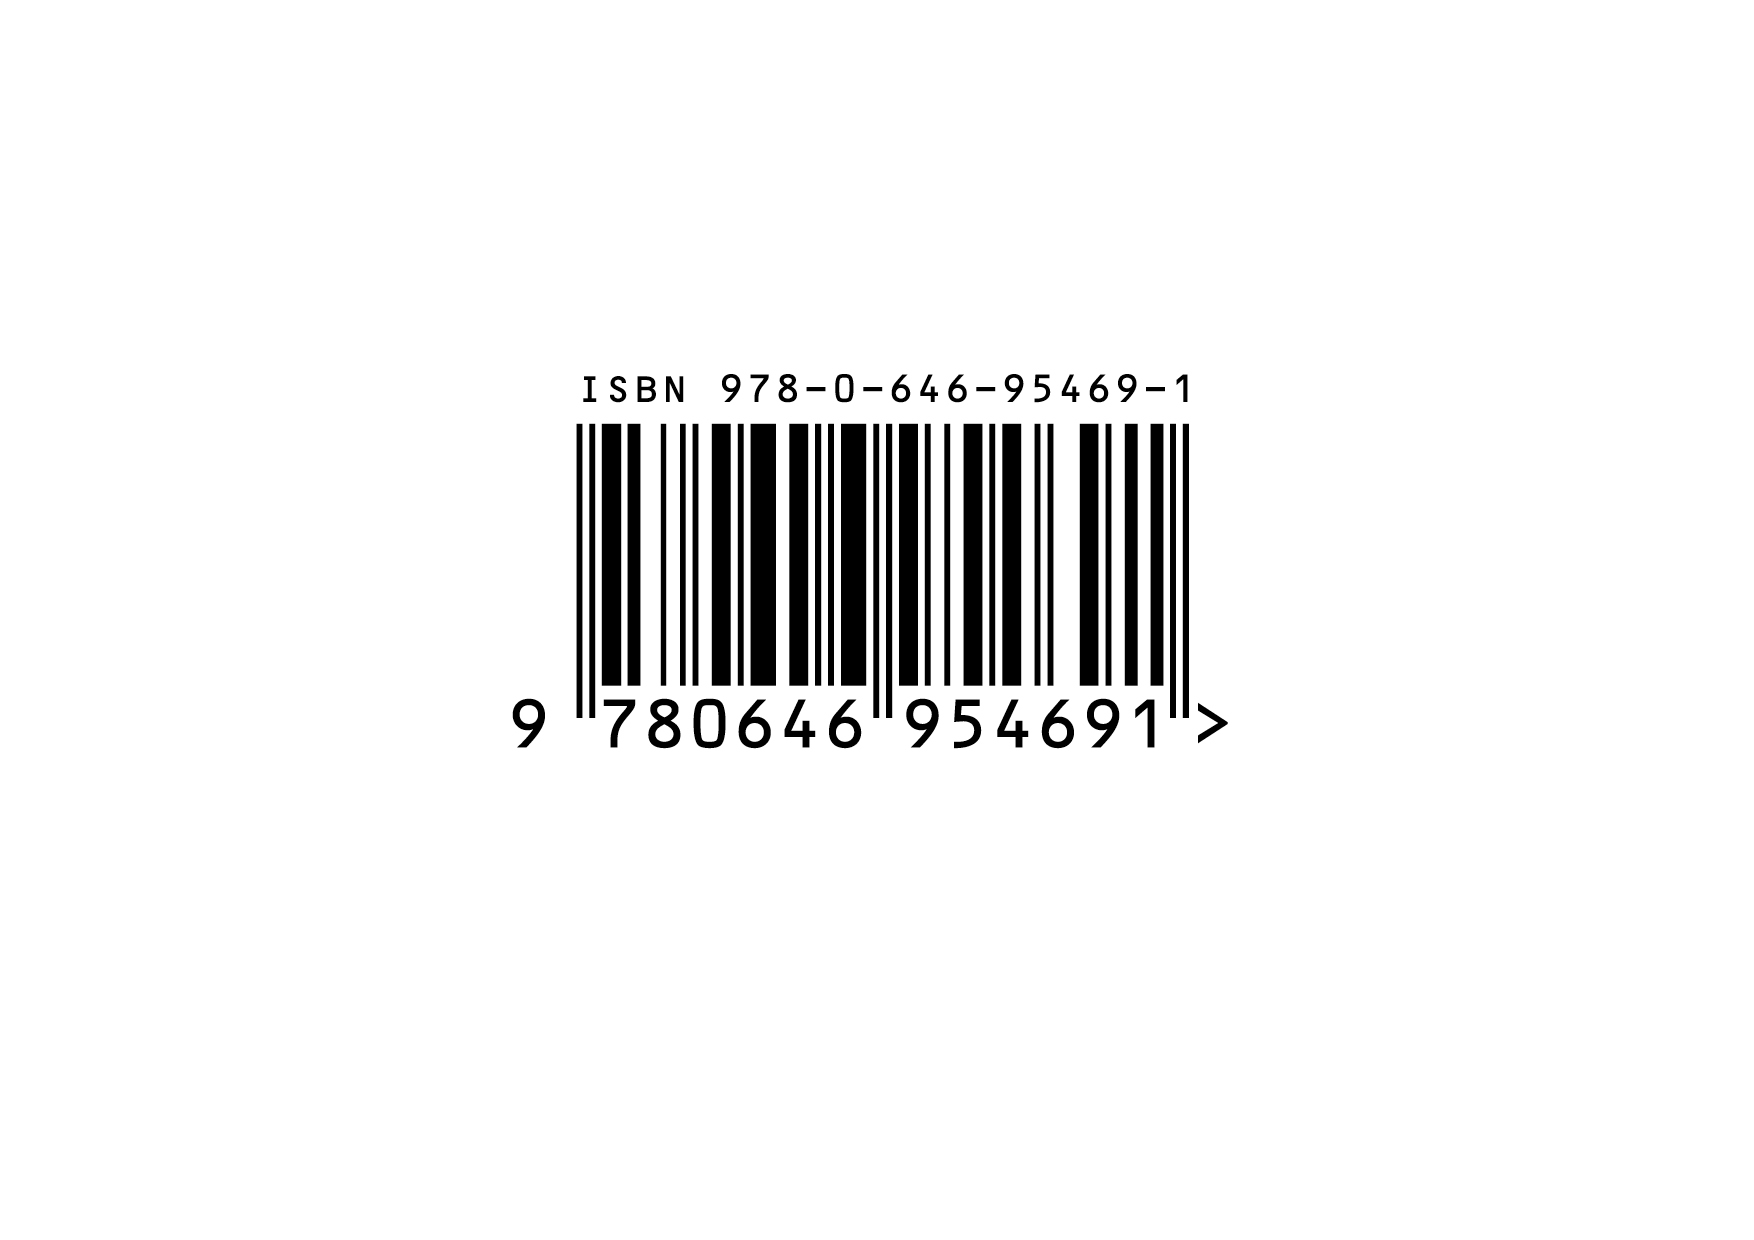 ISBN barcode